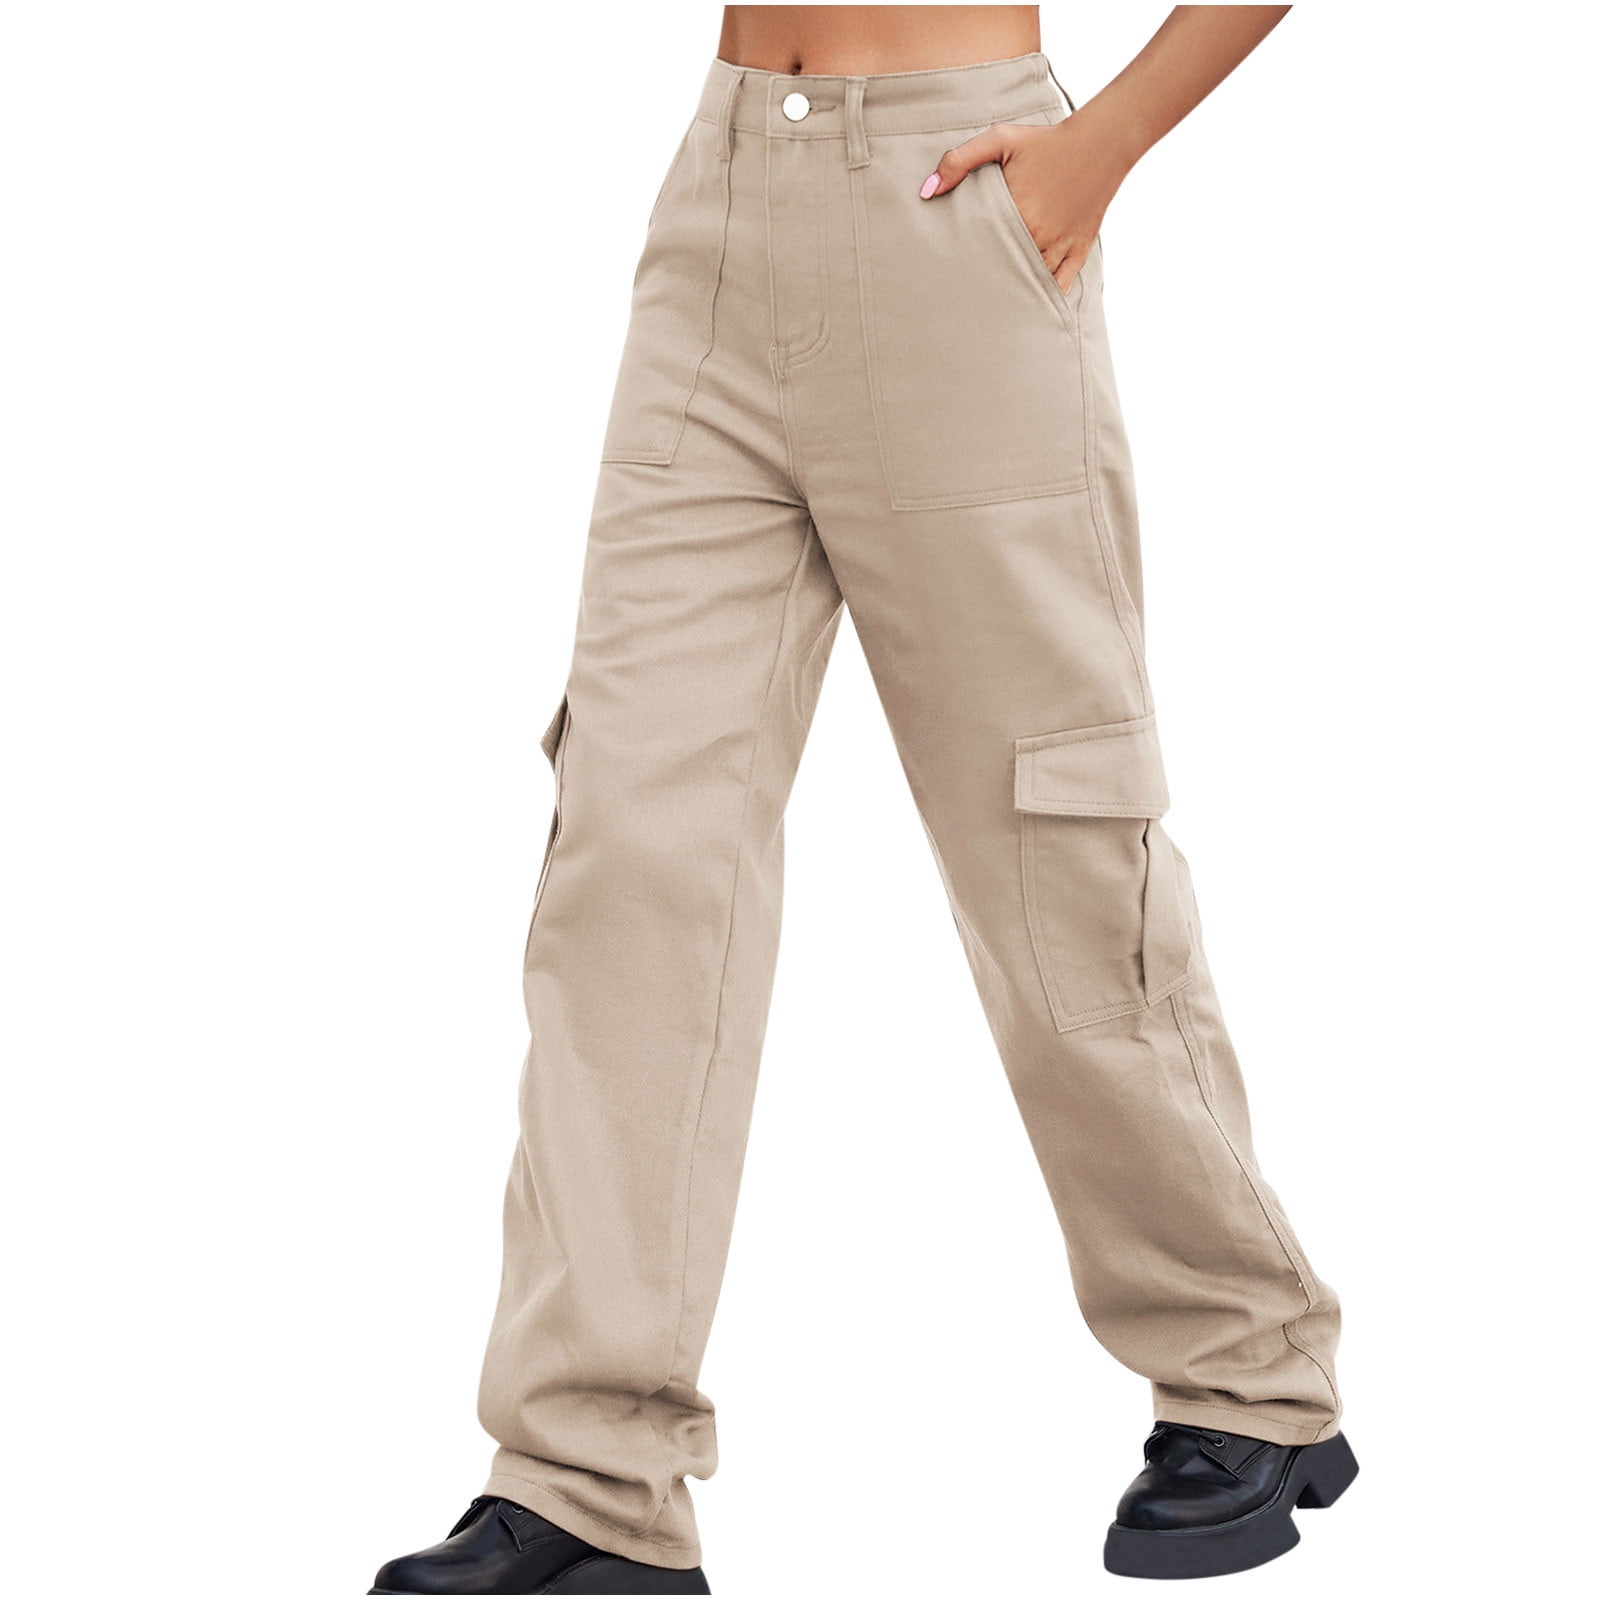 JWZUY Women High Waisted Cargo Pants Wide Leg Straight Casual Pants 6  Pockets Combat Military Trousers Khaki XL 